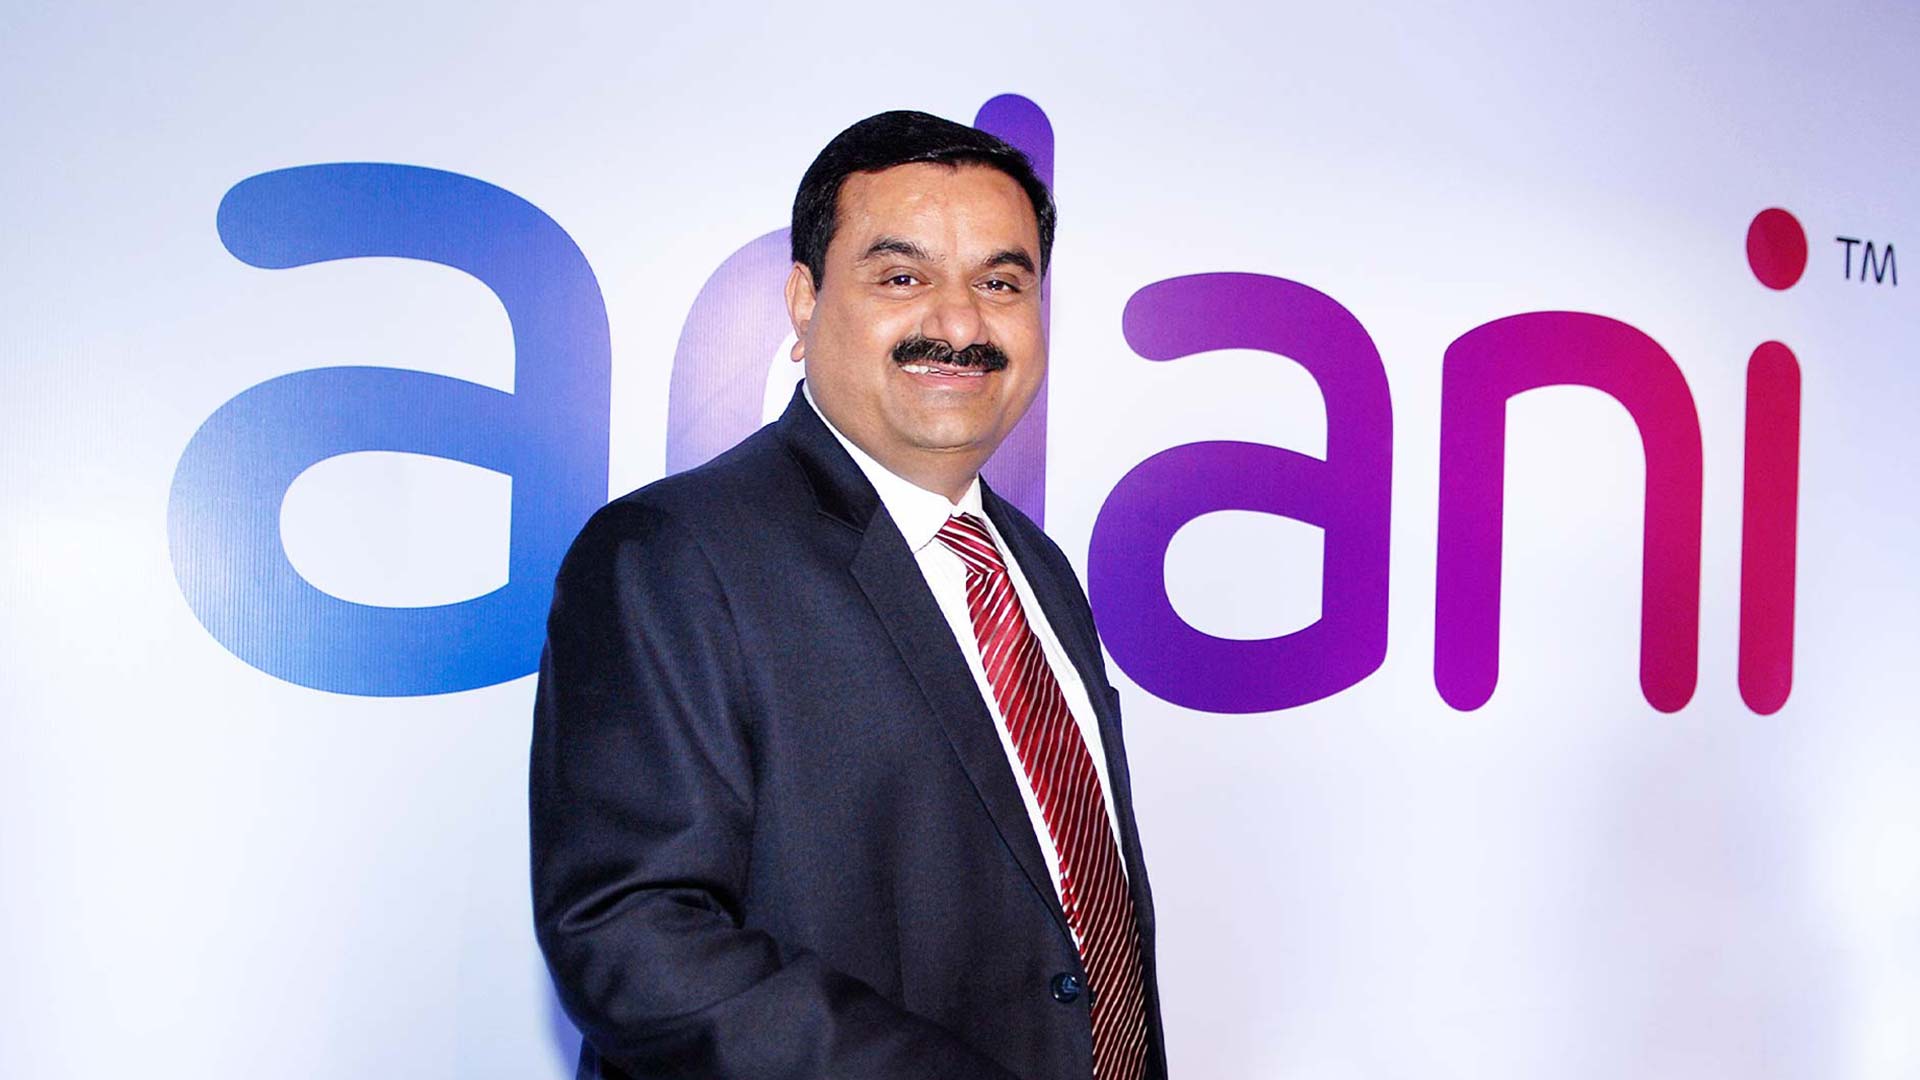 Gautam Adani edges past Mukesh Ambani to become Asia's richest man